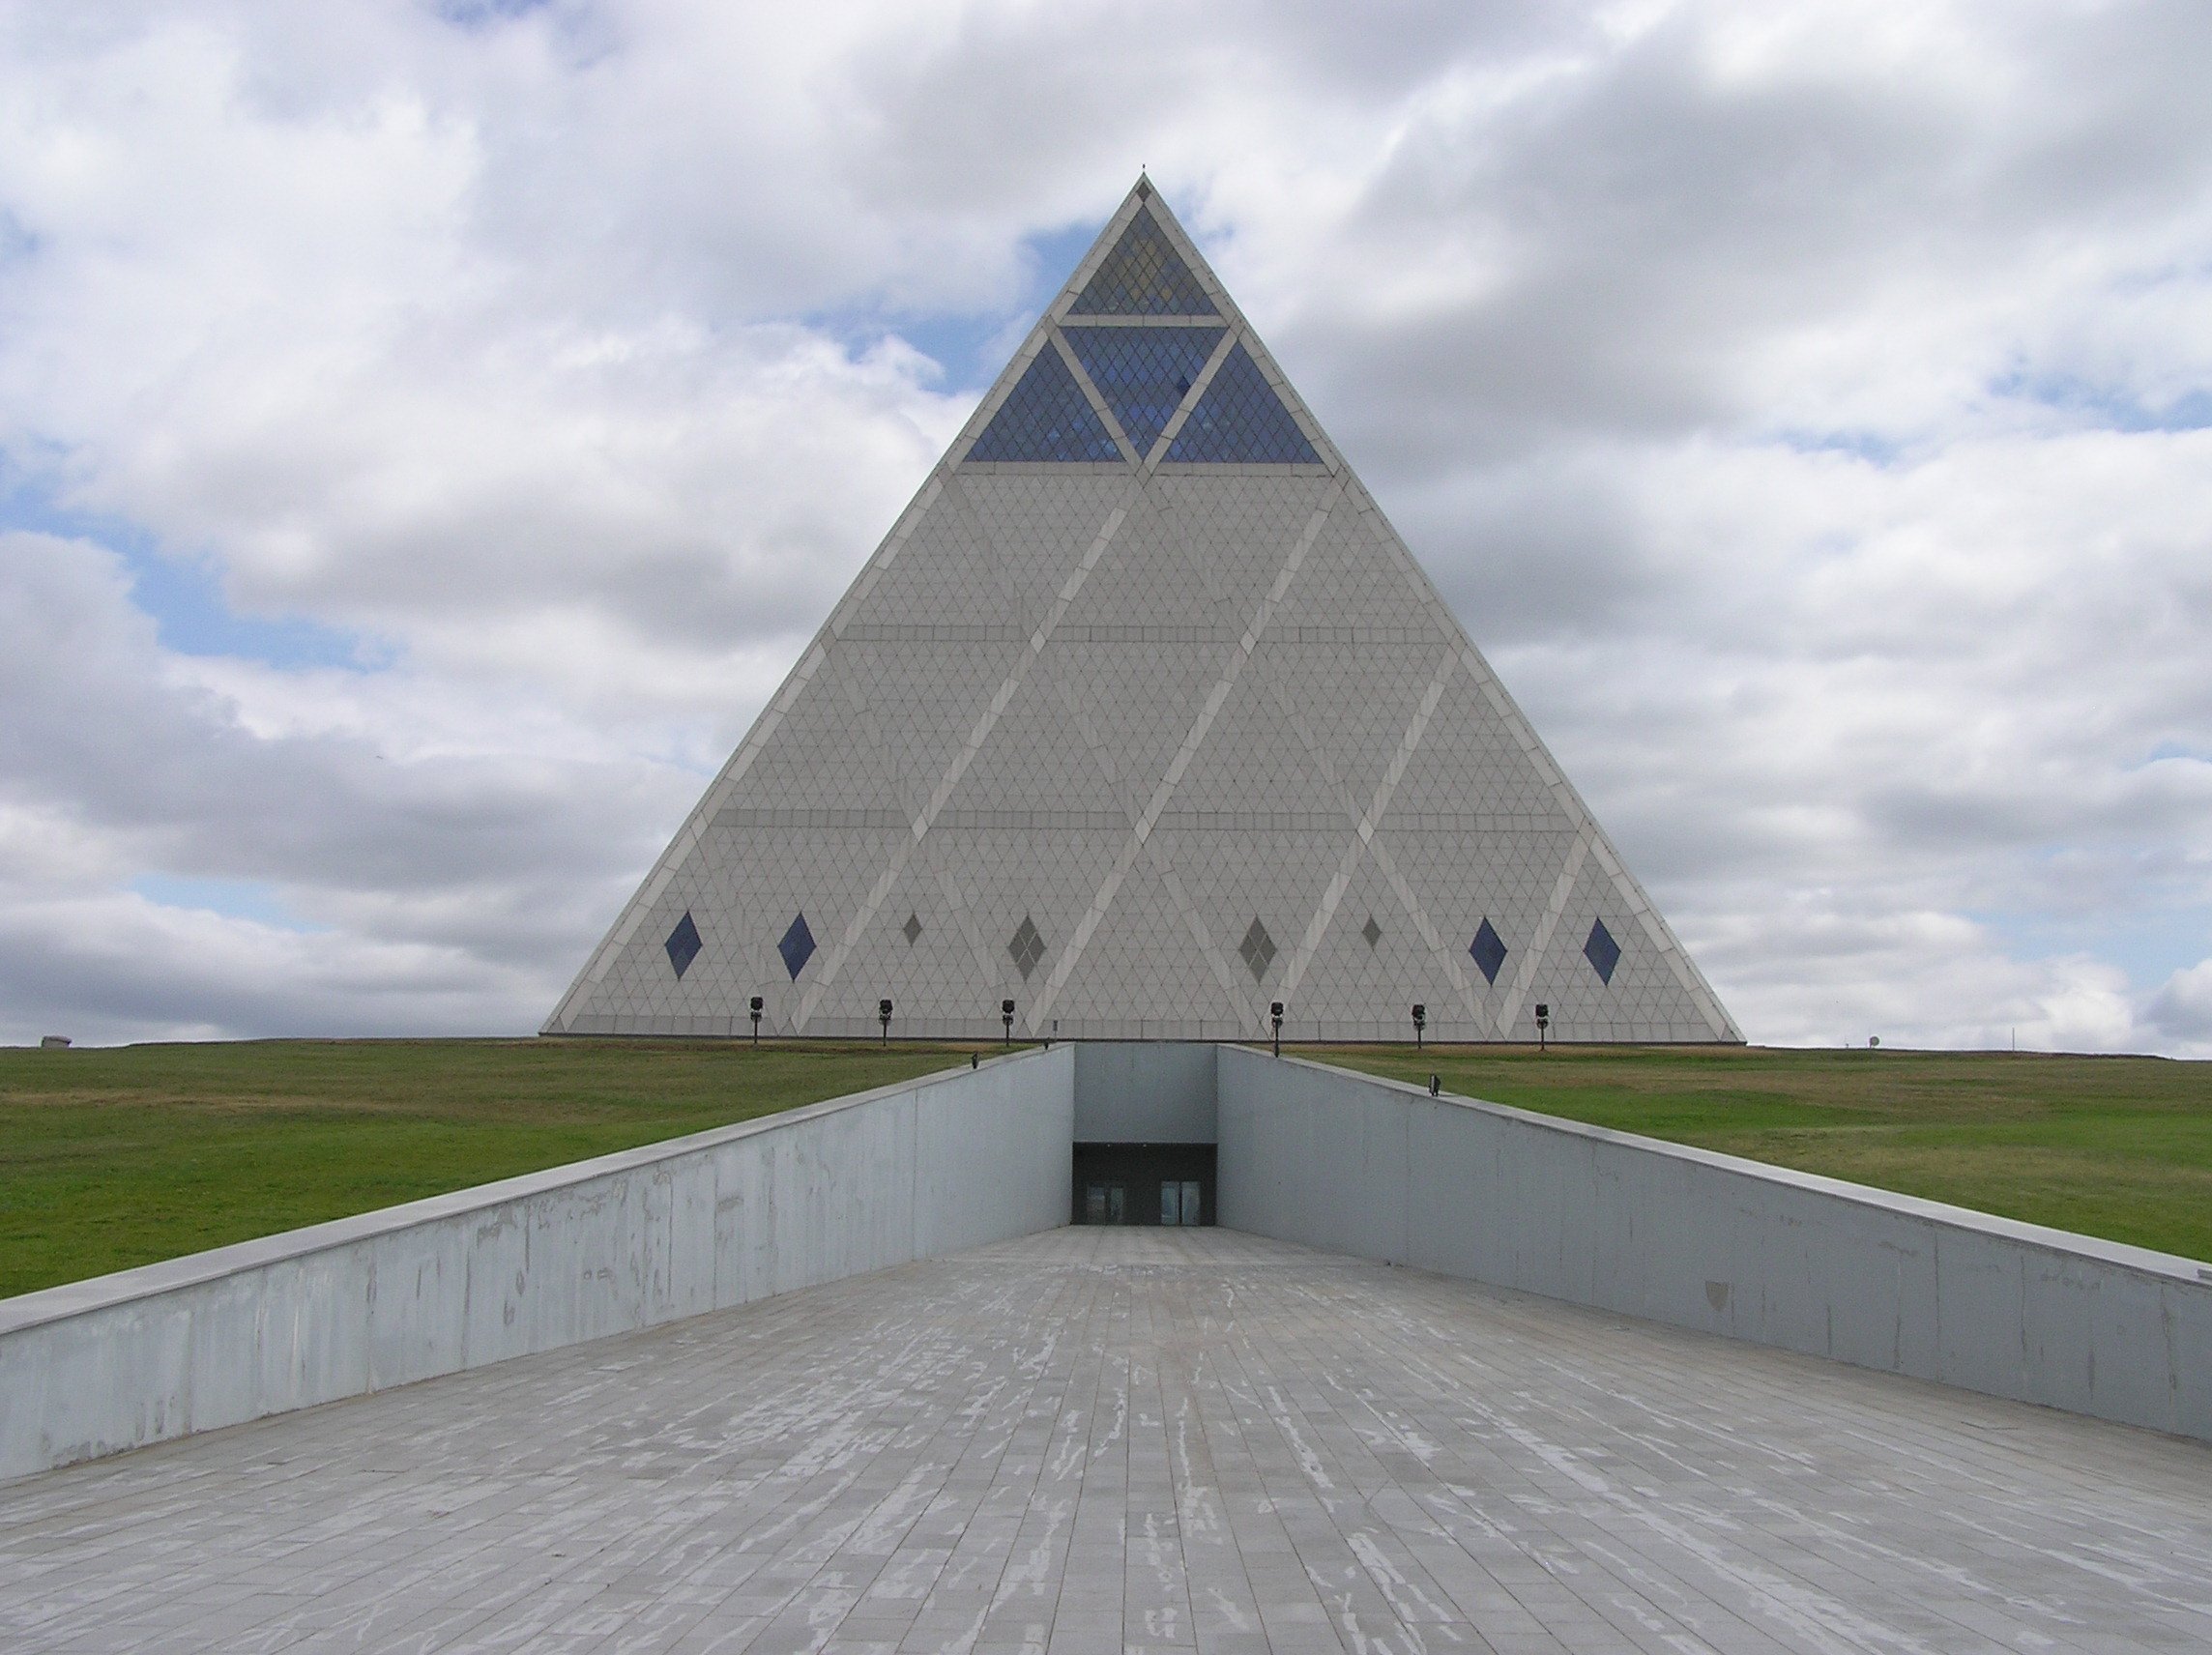 Виды пирамид архитектурные. Йо минг «пирамида Лувра». «Великолукская пирамида». Усечённый тетраэдр в архитектуре.